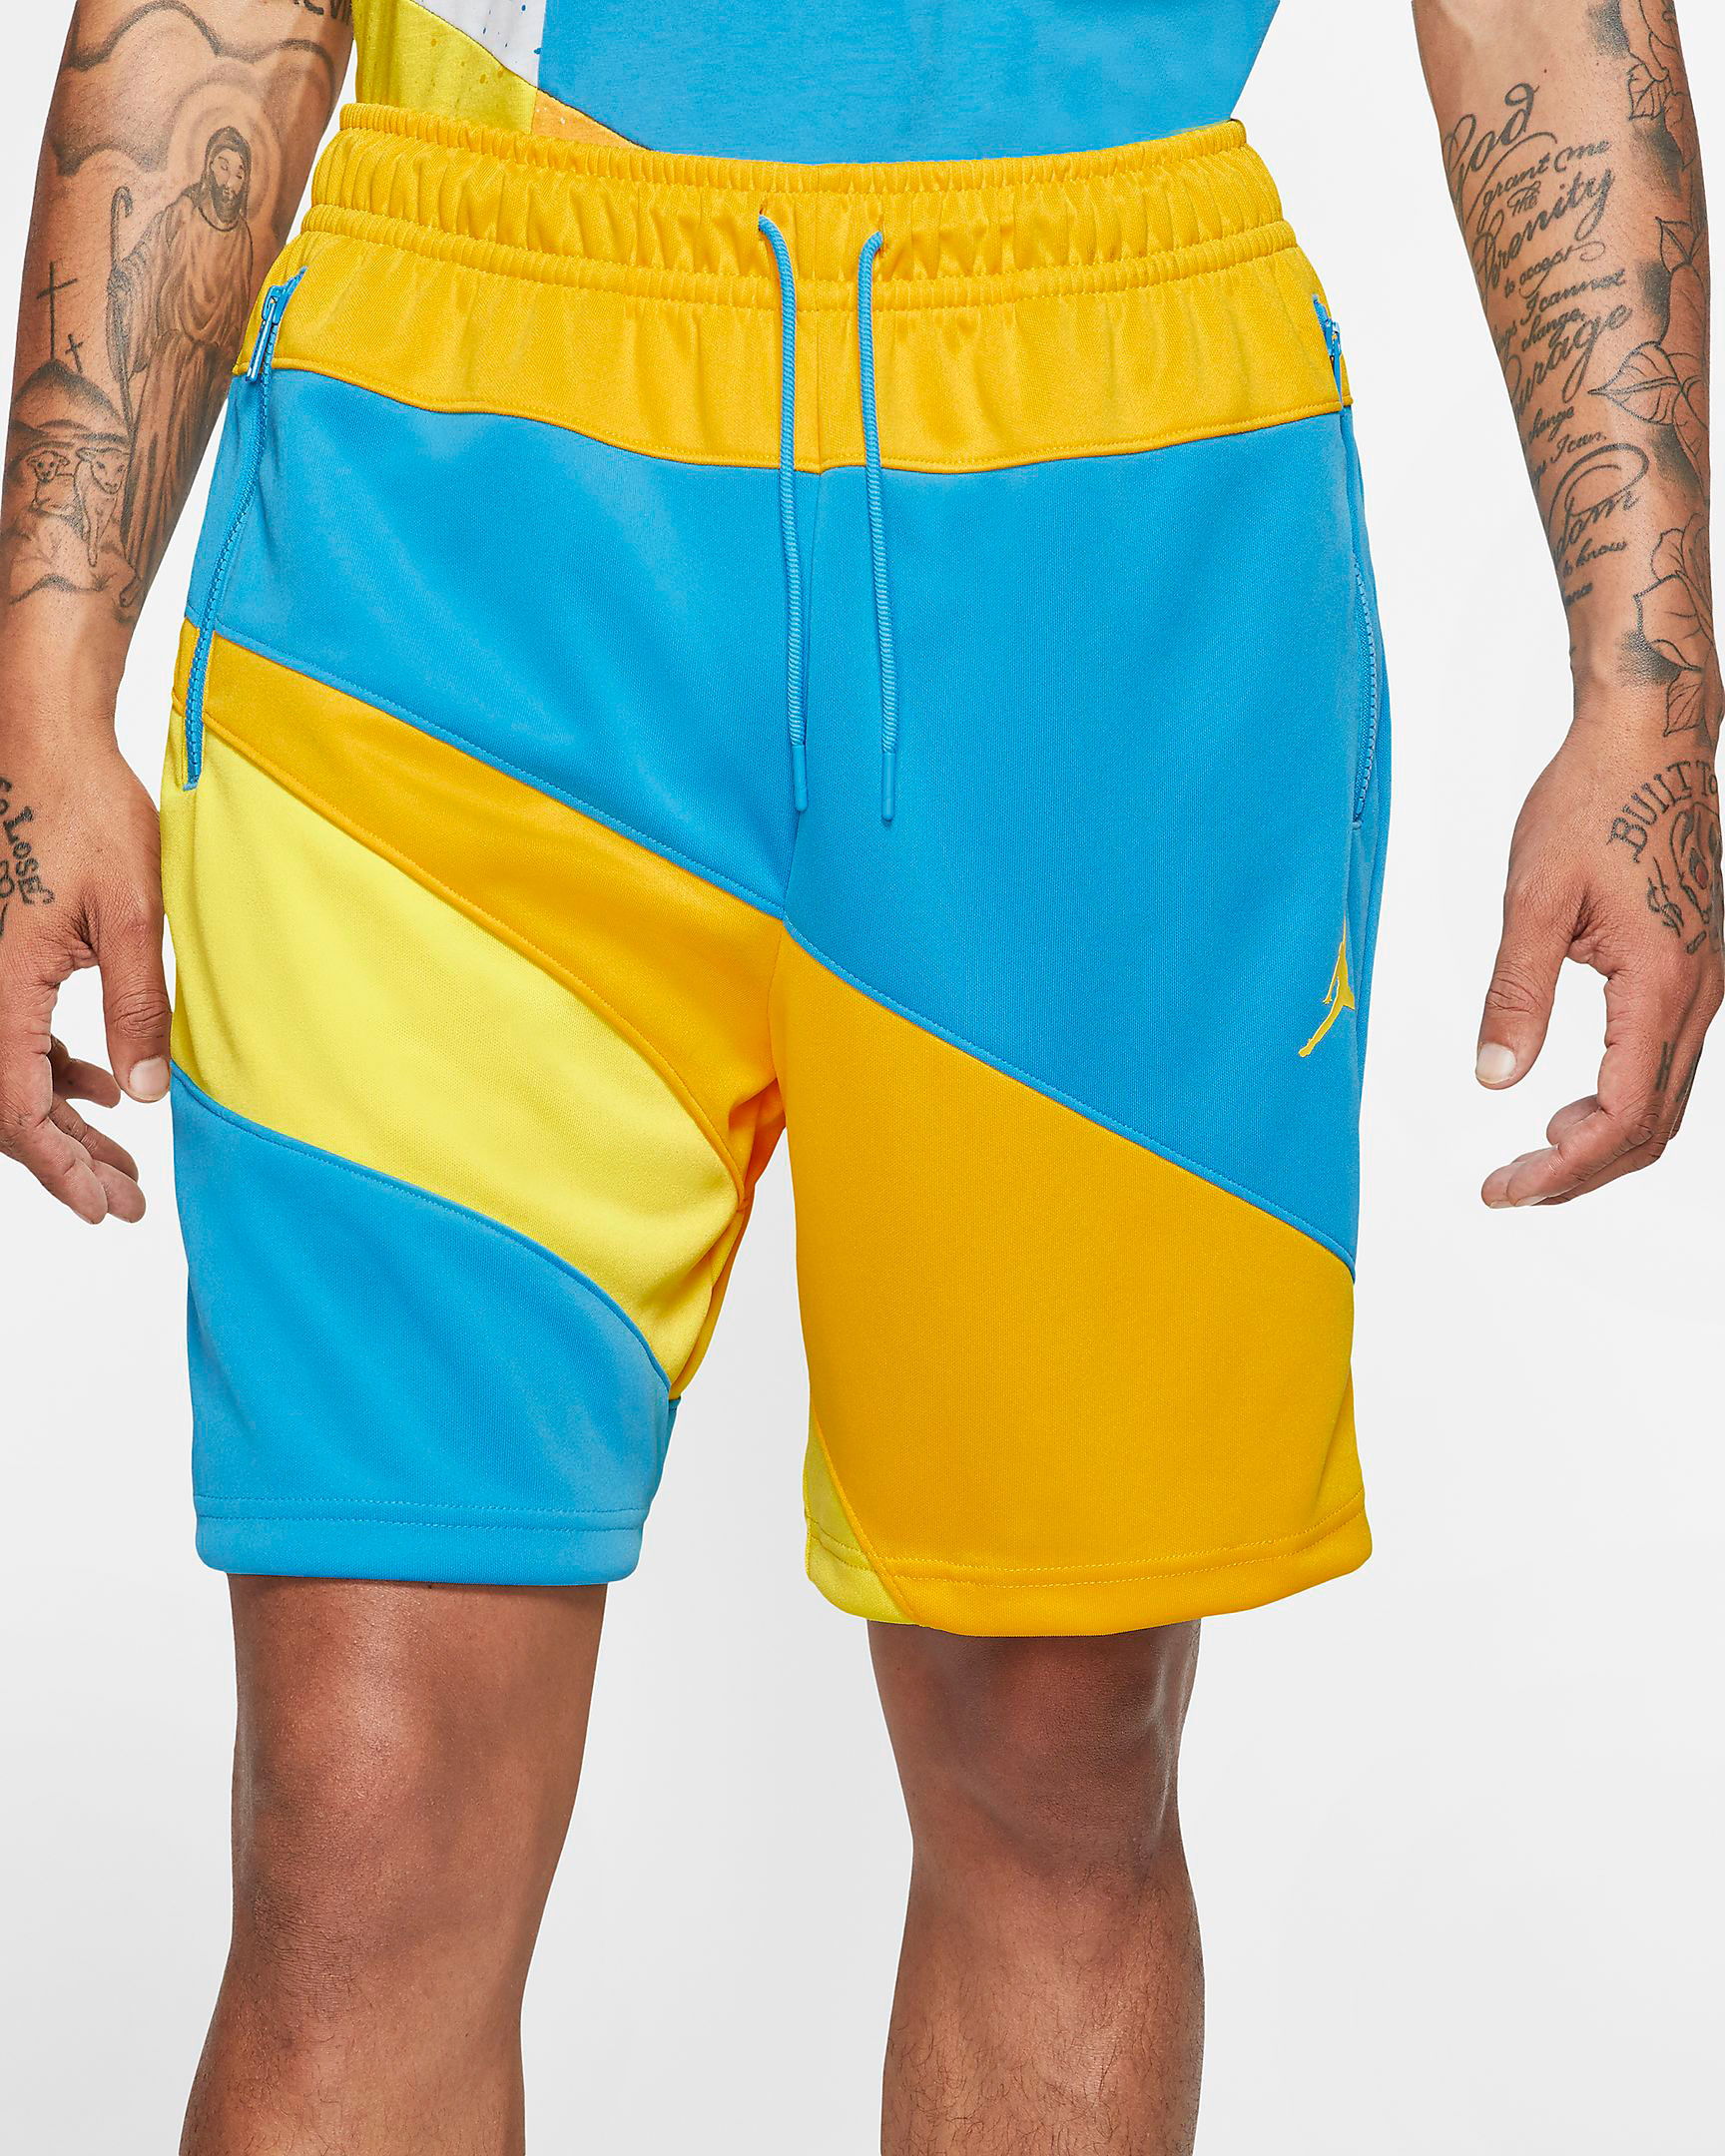 jordan-wave-shorts-blue-yellow